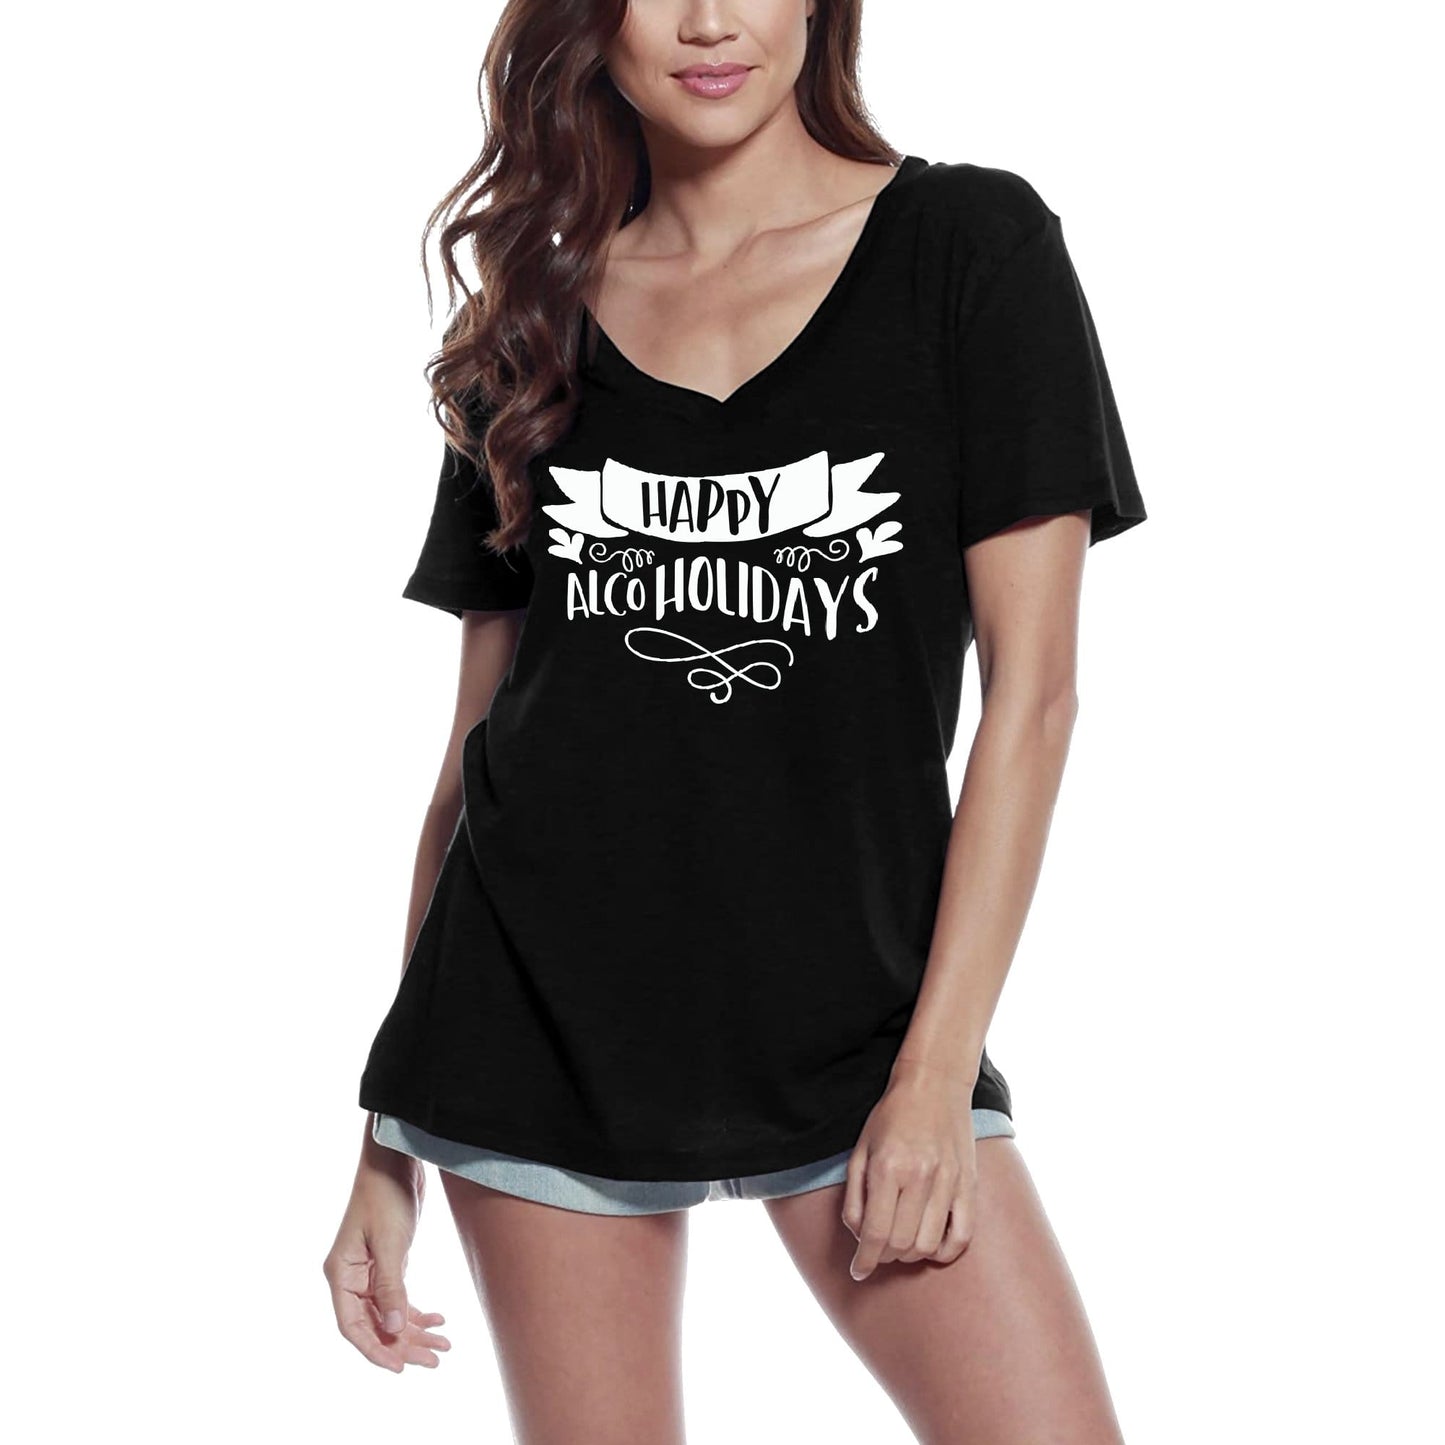 ULTRABASIC Women's T-Shirt Happy Alcoholidays - Funny Humor Short Sleeve Tee Shirt Tops